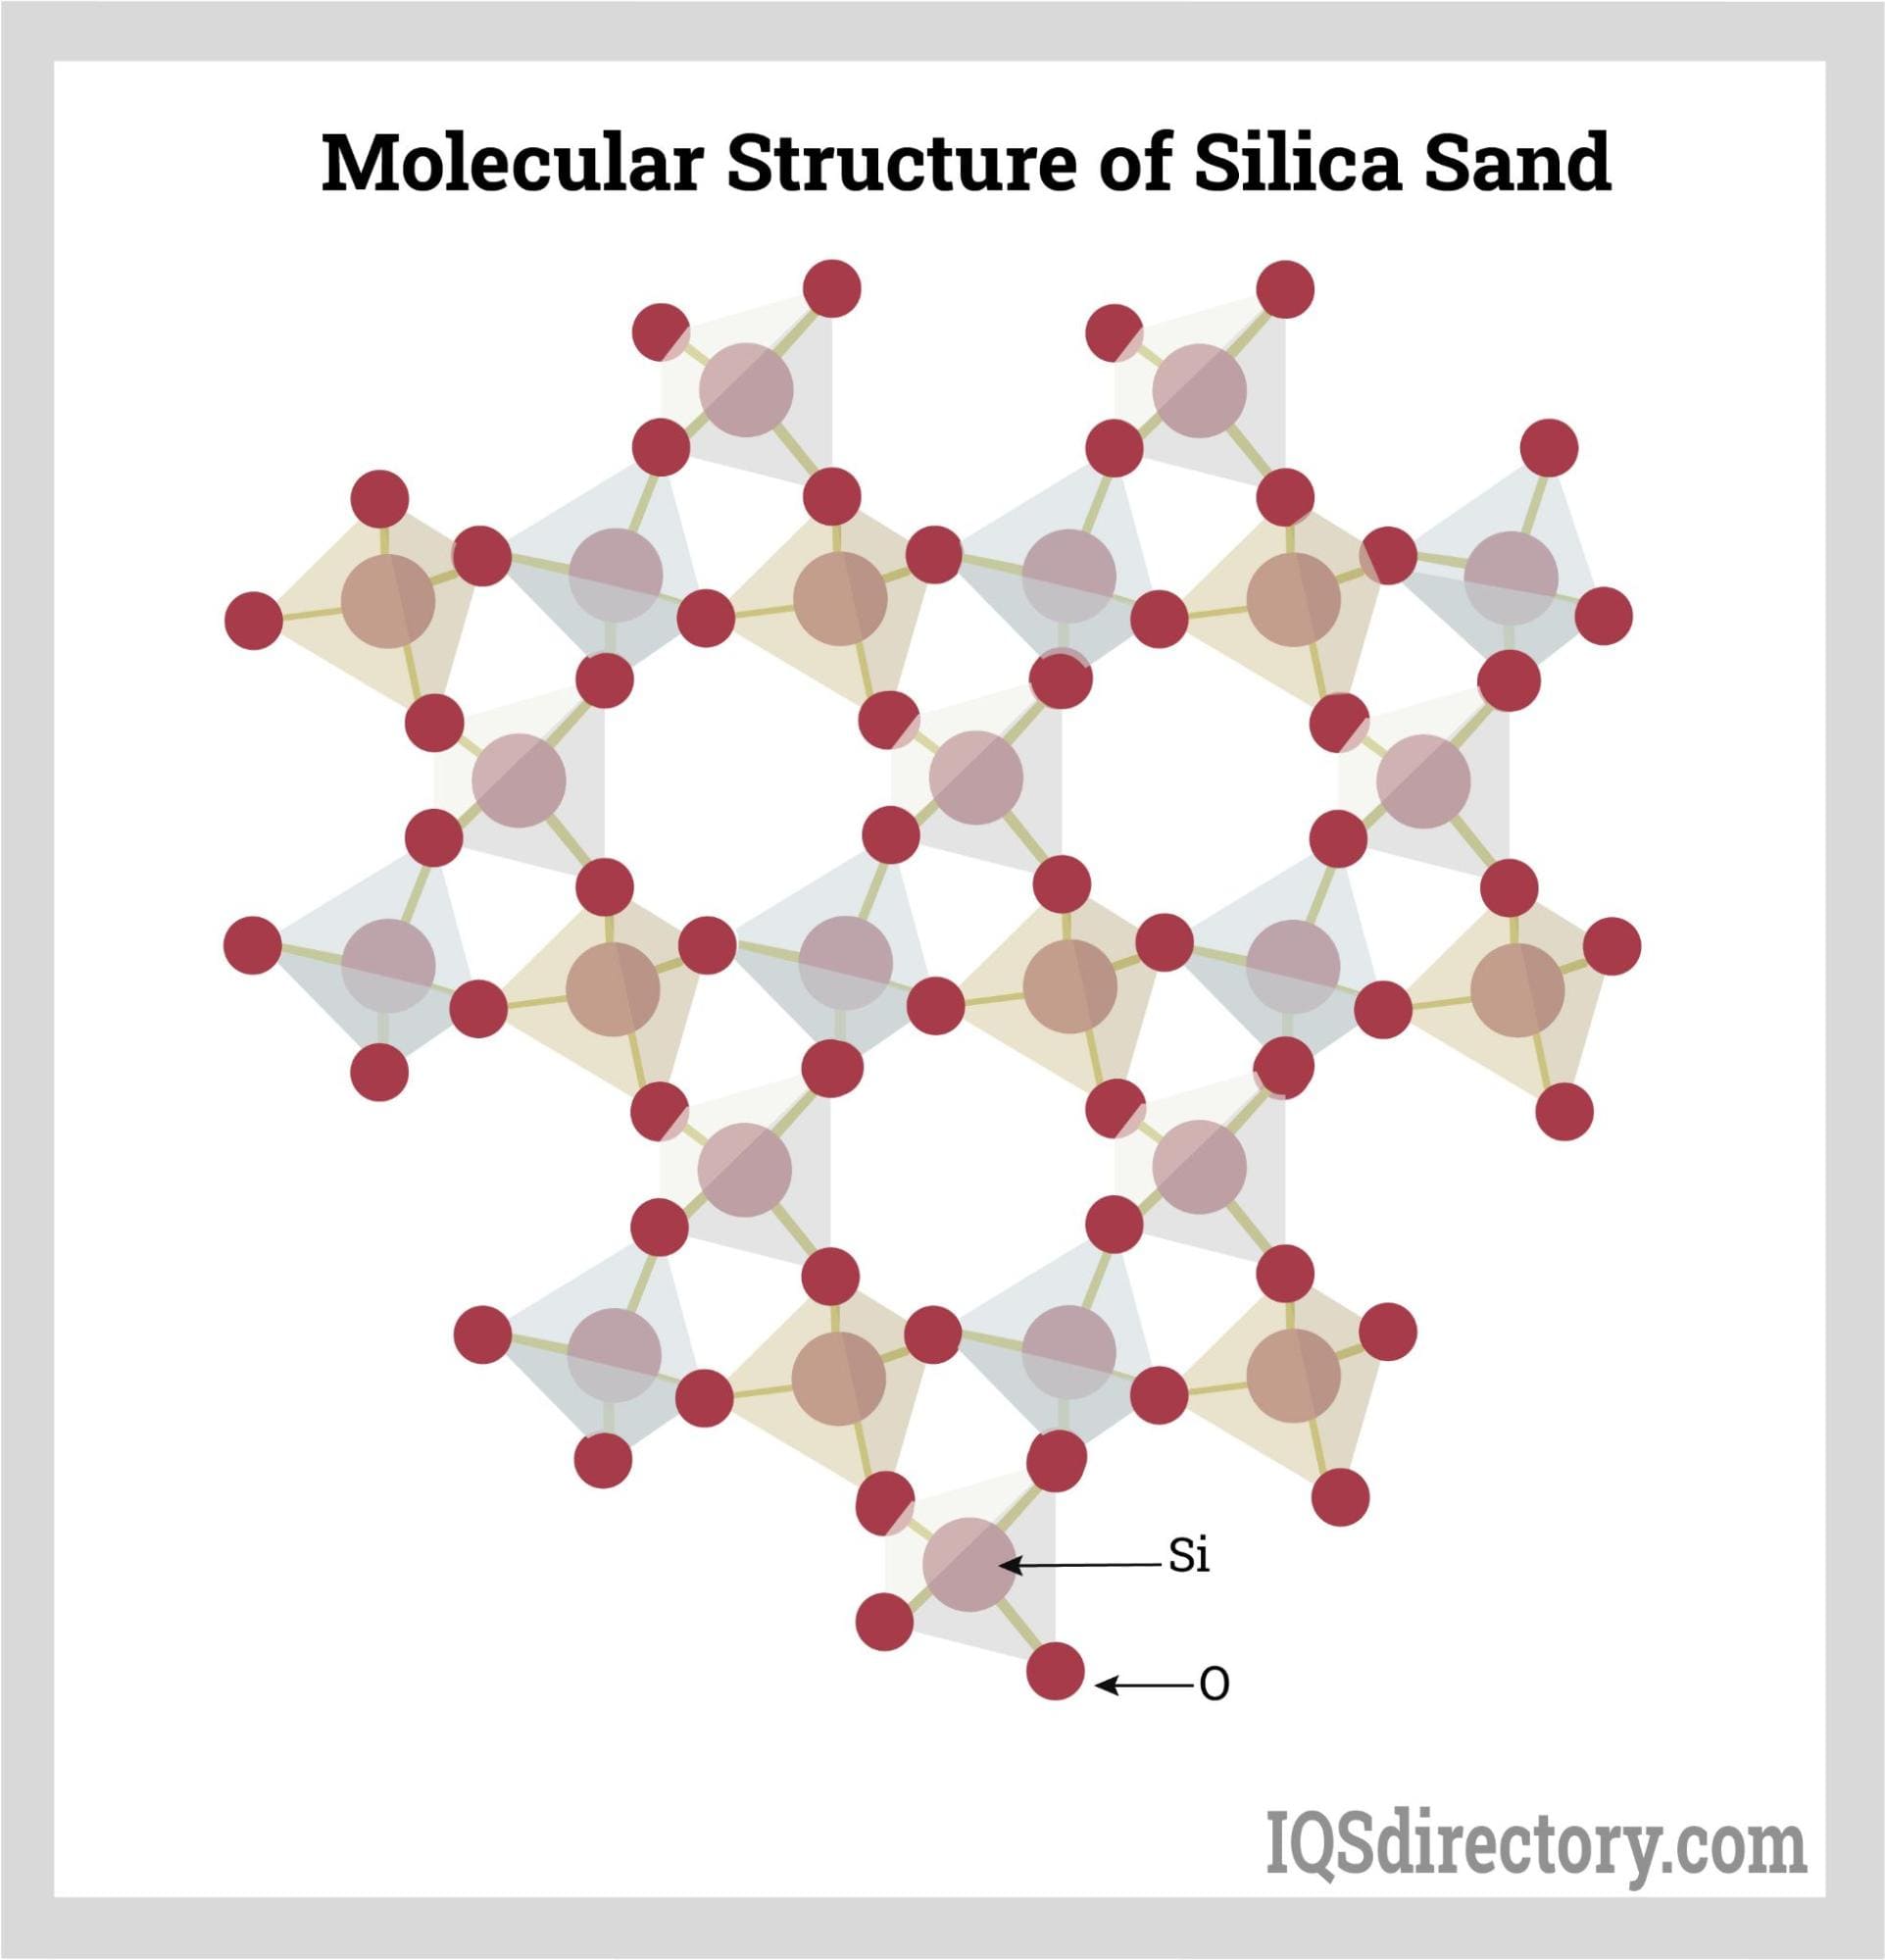 Molecular Structure of Silica Sand